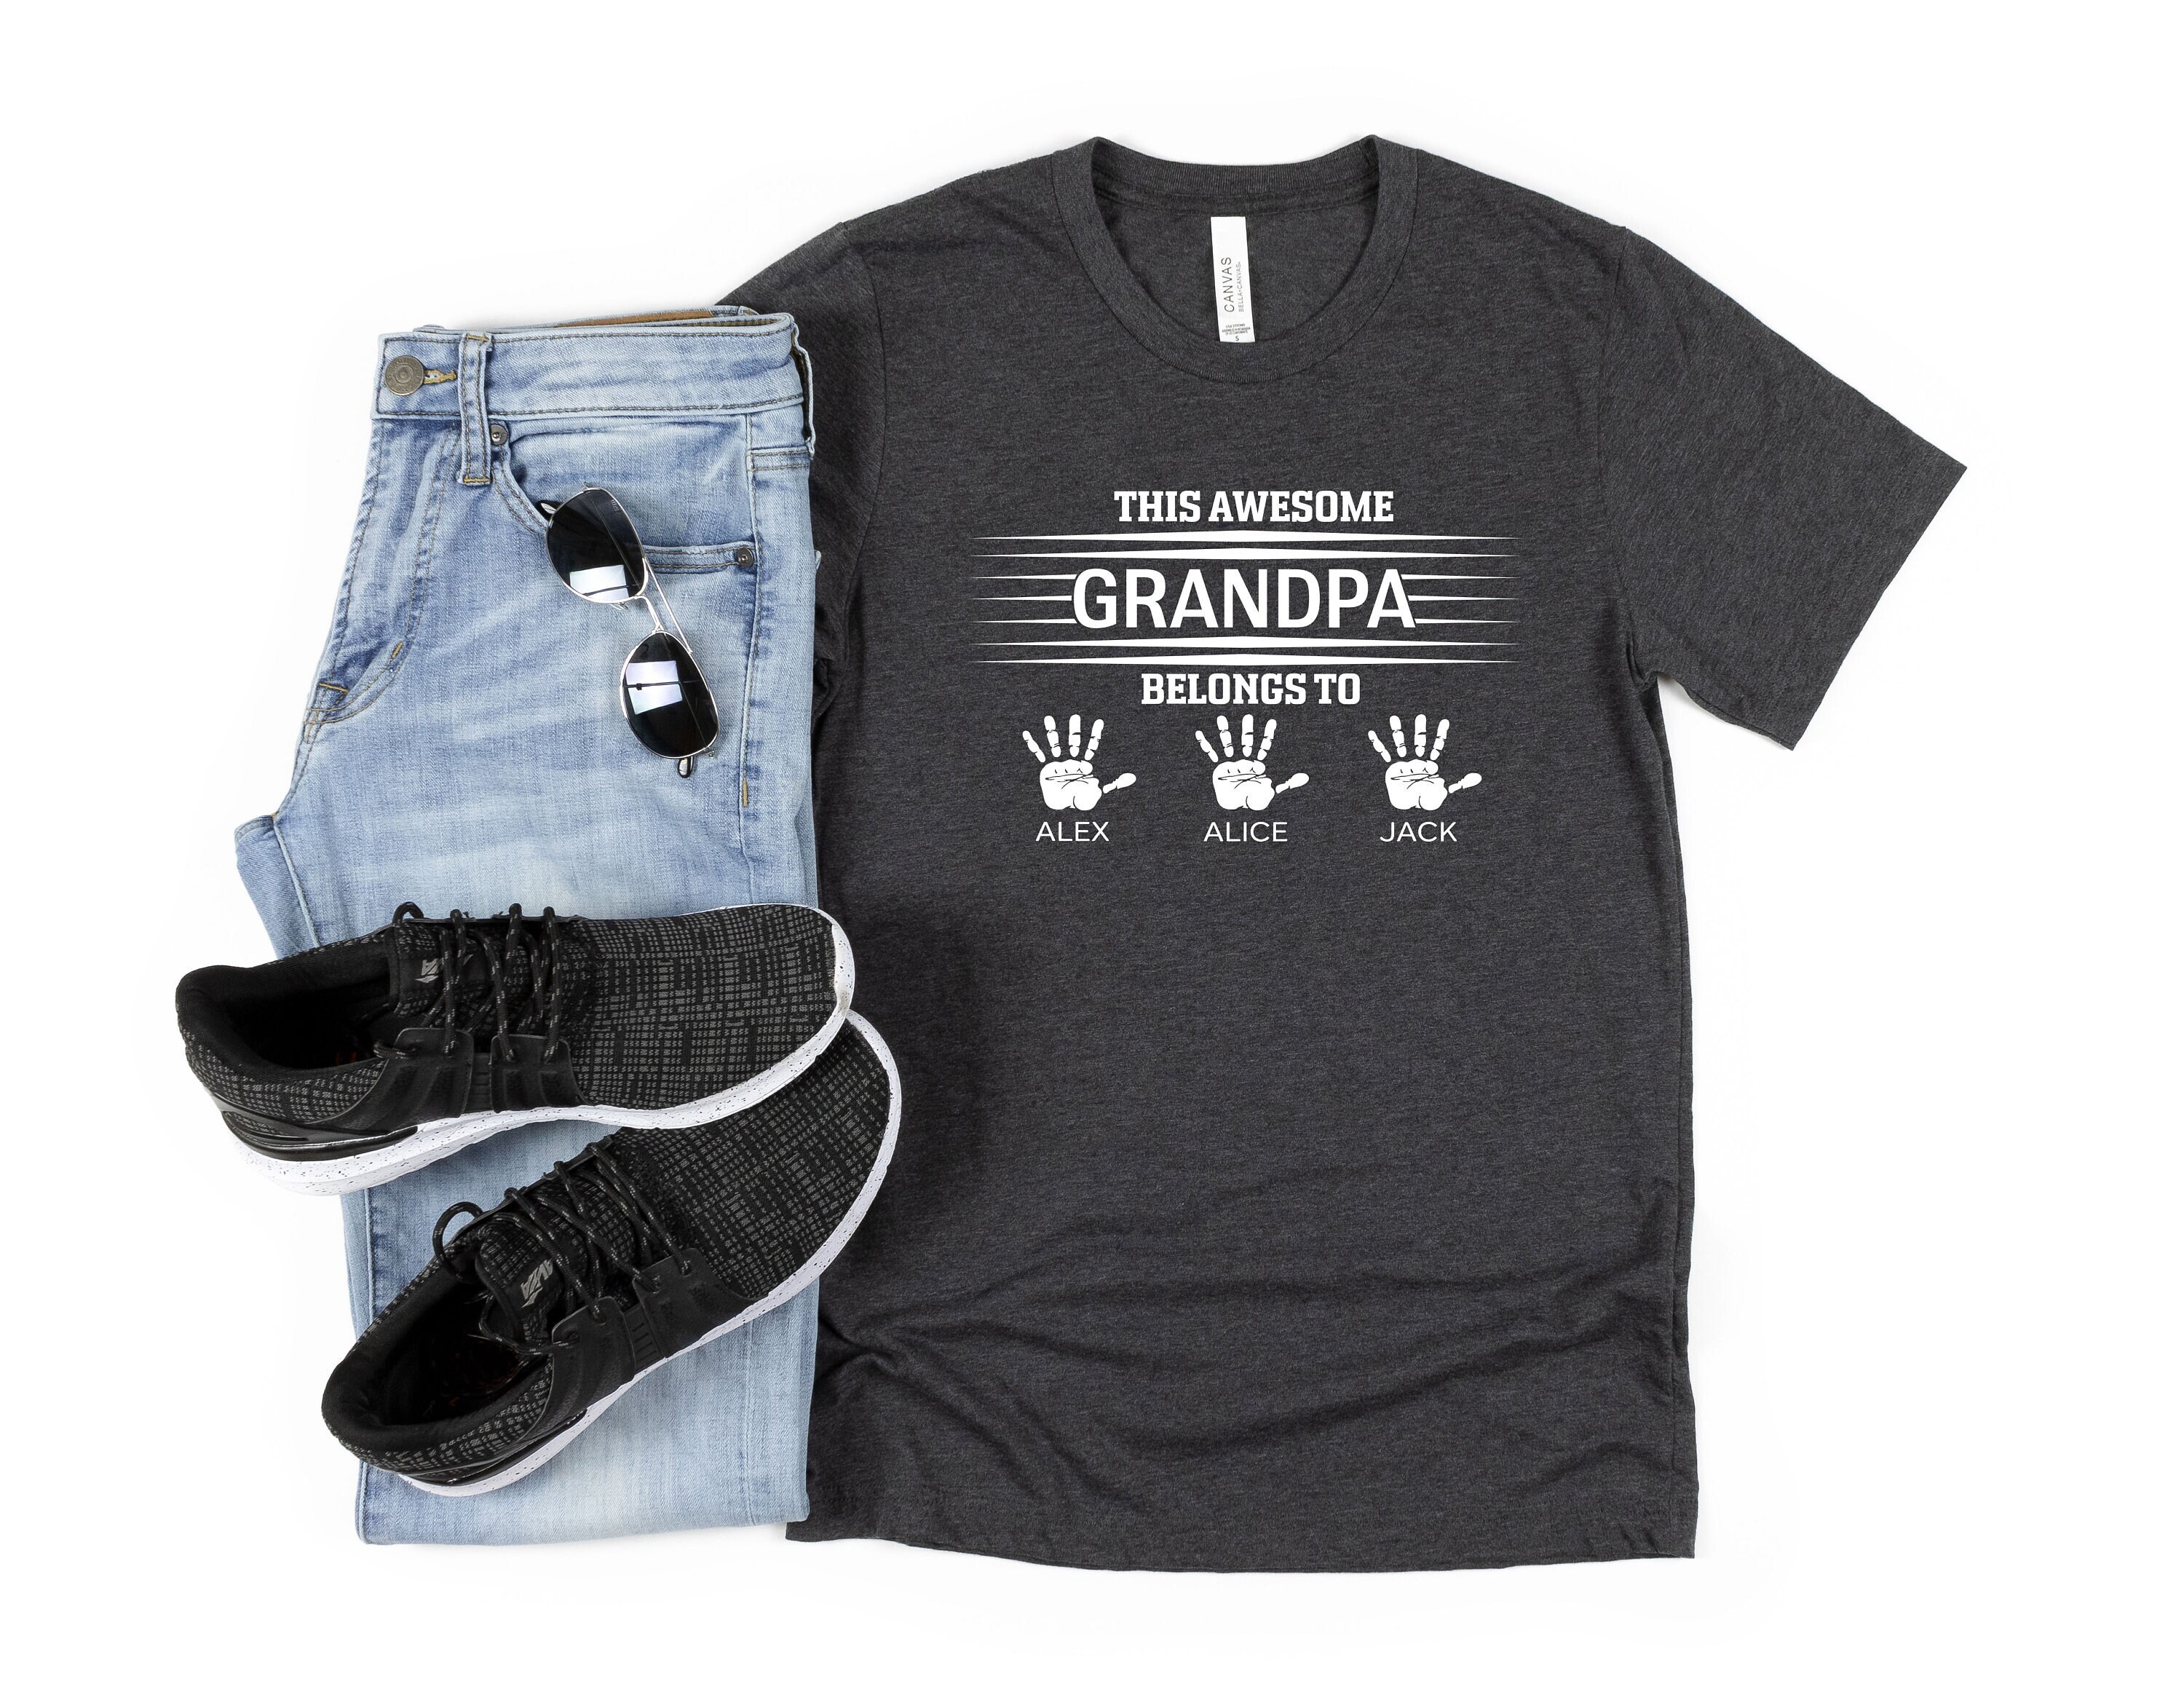 Personalized Grandpa's Little Shits Cute Grandkids Name Shirt For Grandpa